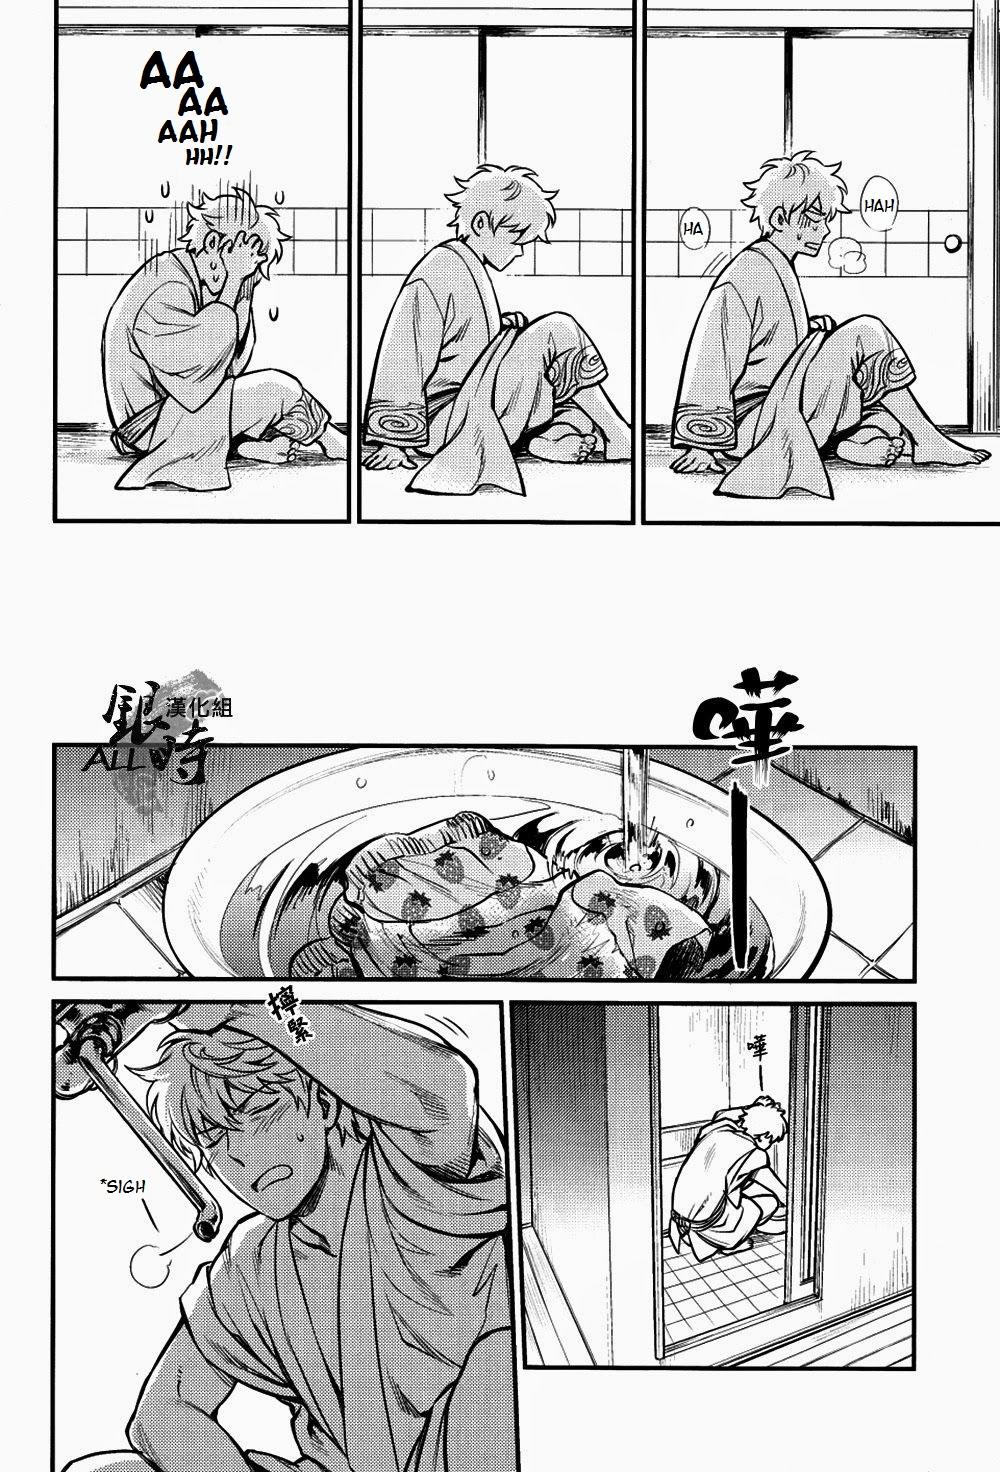 Curious Please! Gintoki - Gintama Art - Page 5